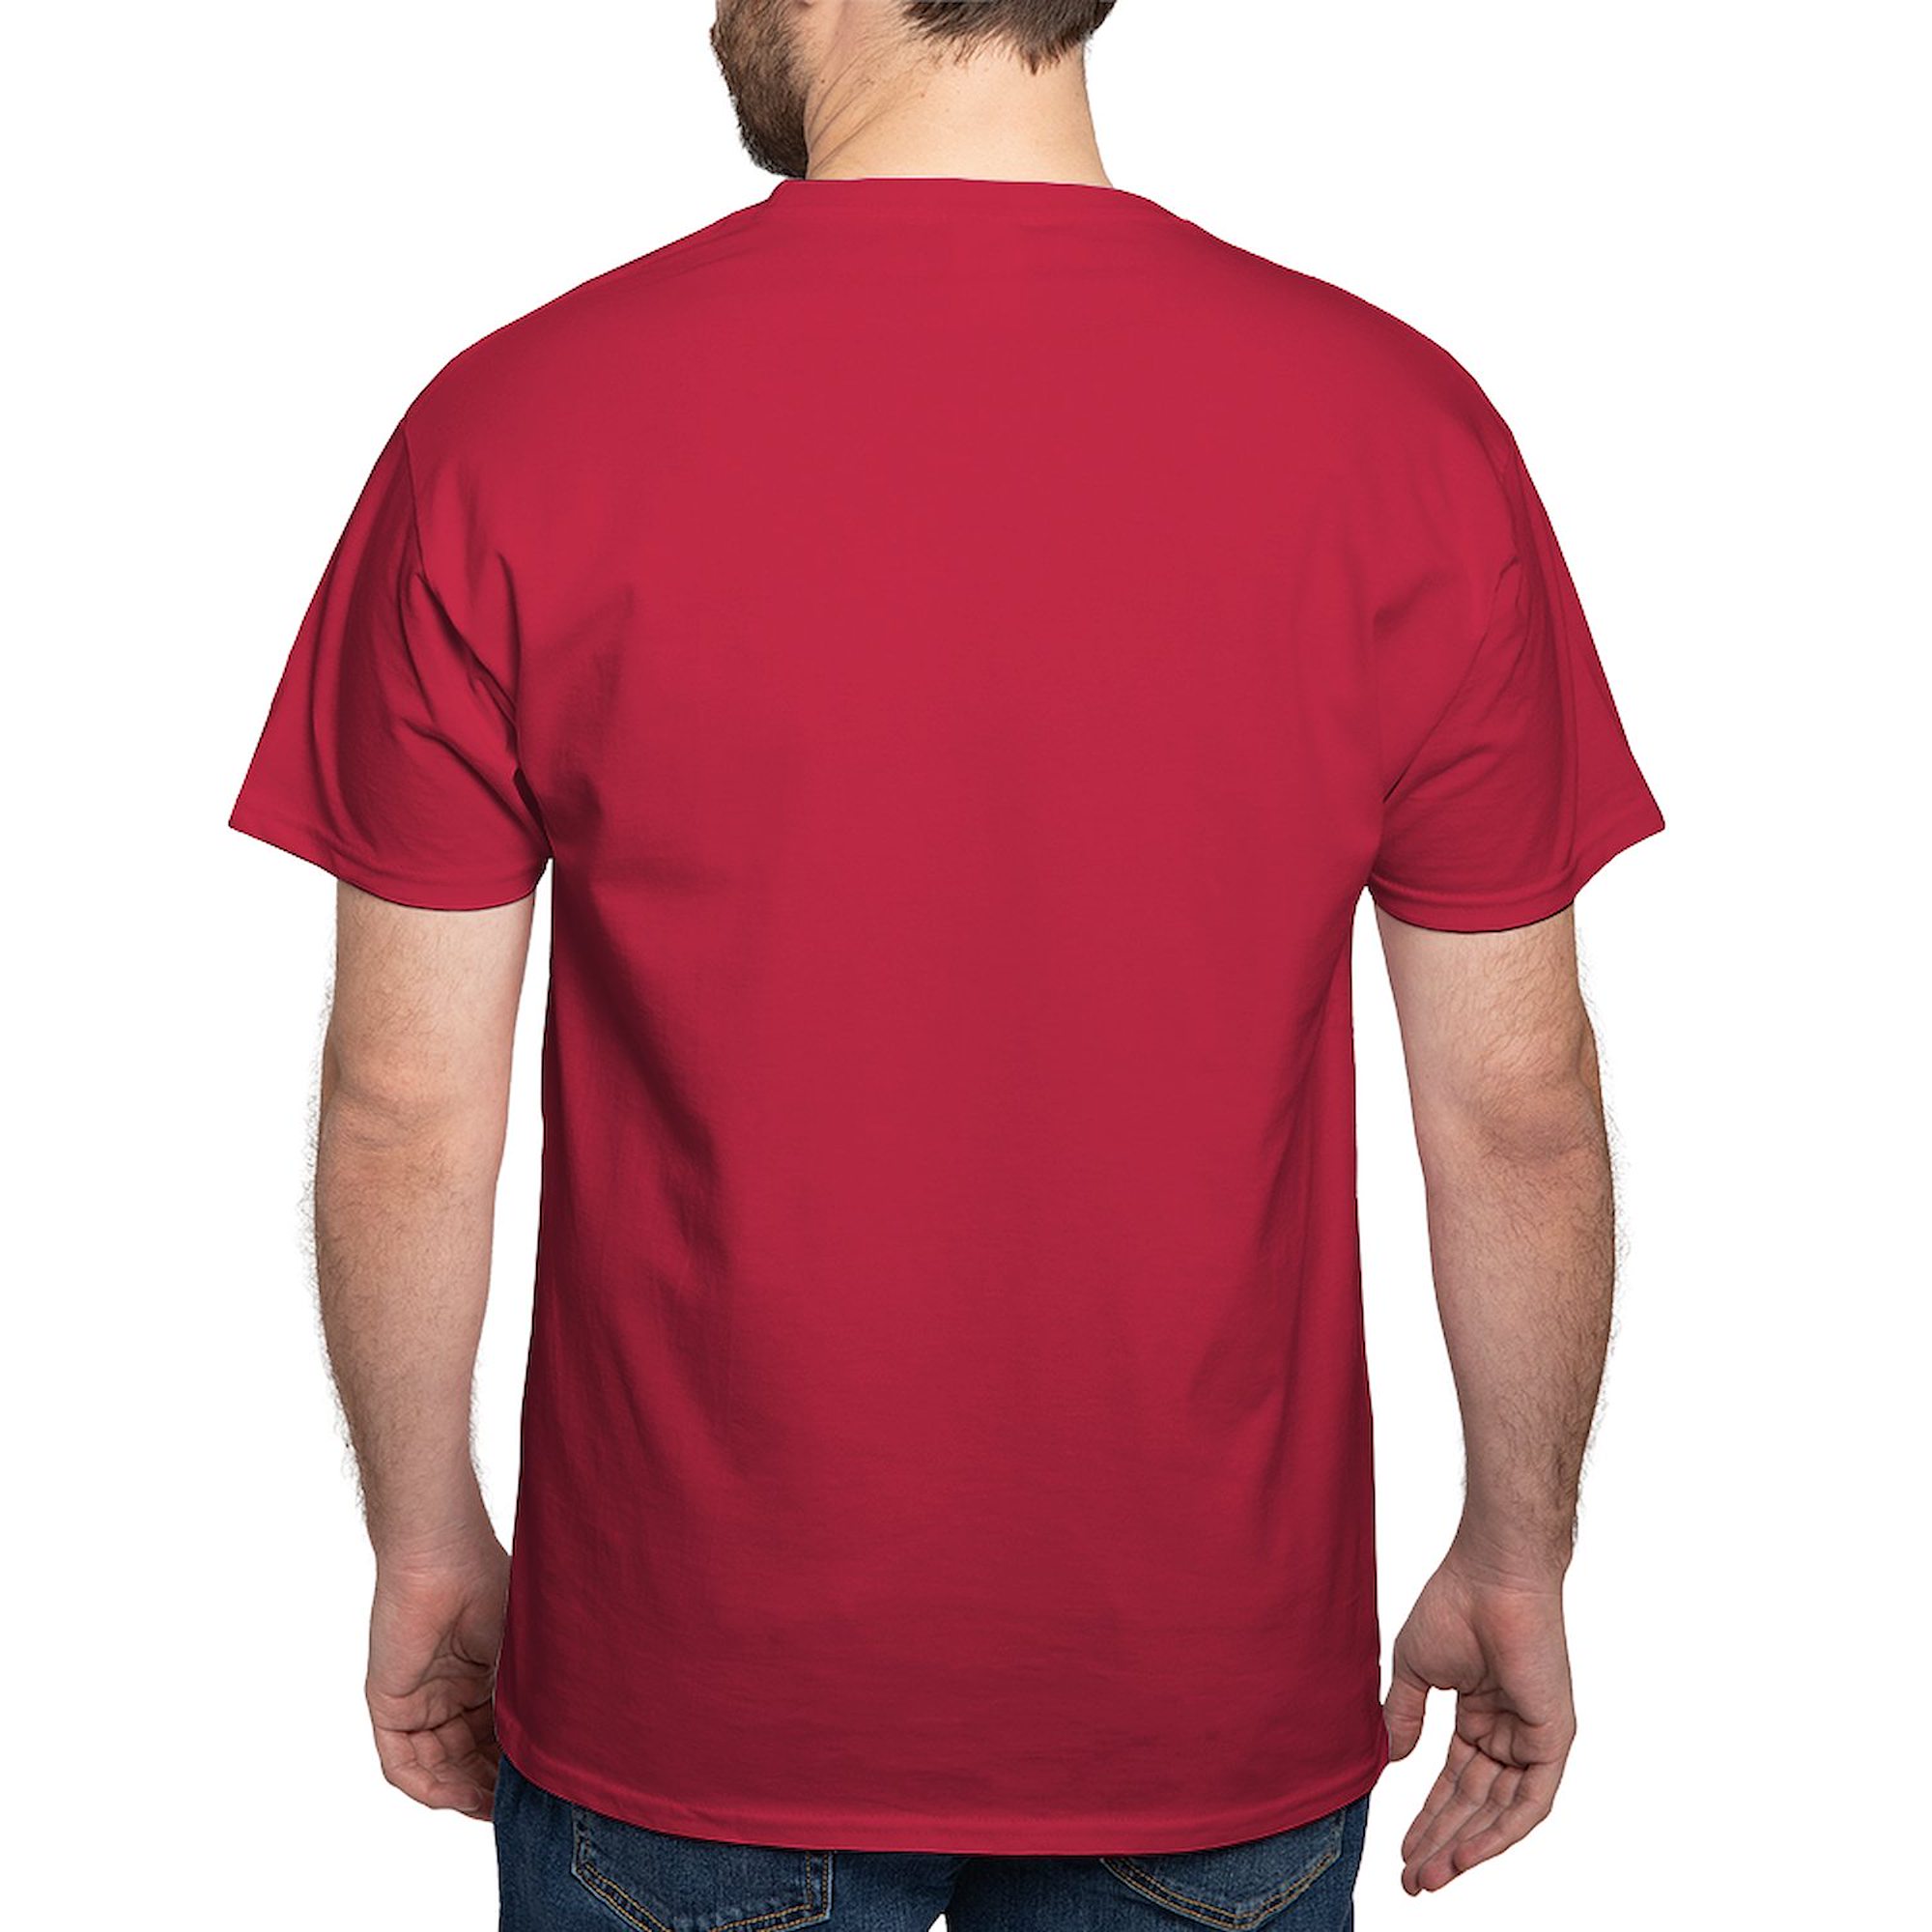 CafePress - I May Be Old T Shirt - 100% Cotton T-Shirt - image 2 of 4